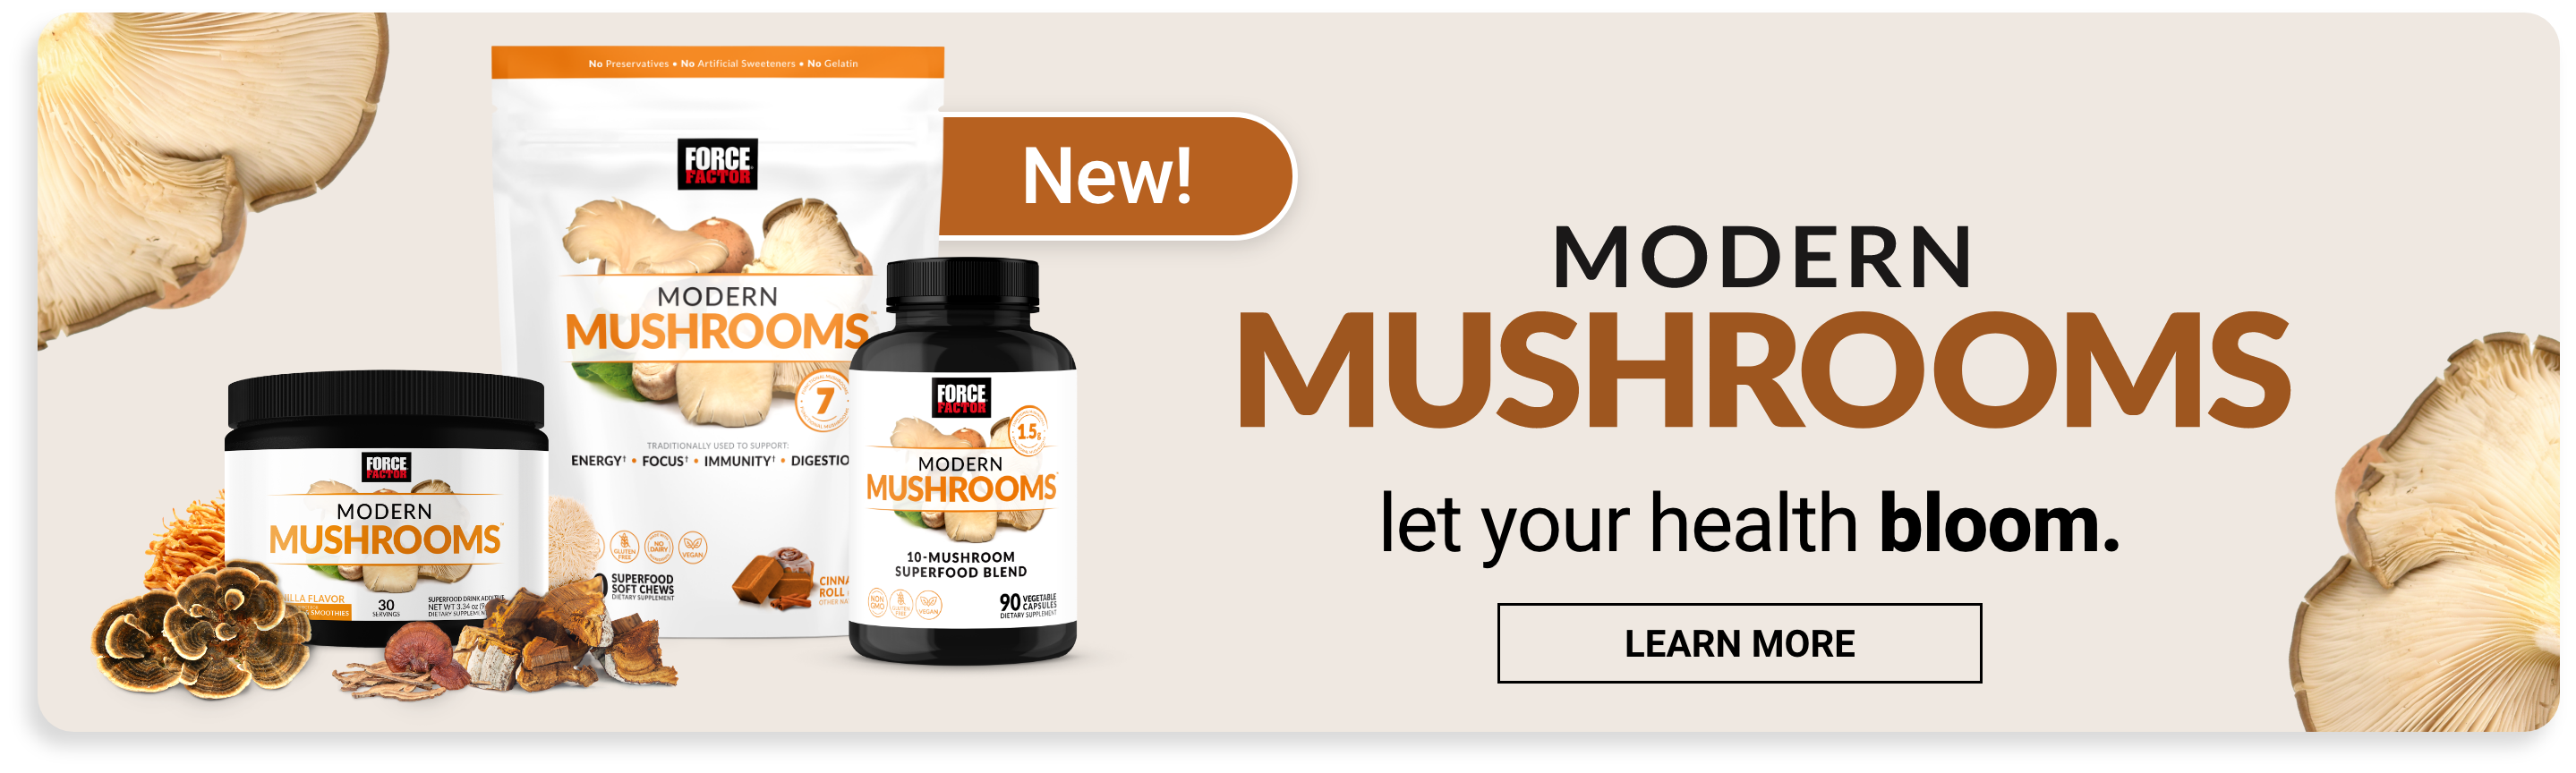 New! Modern Mushrooms - Learn More